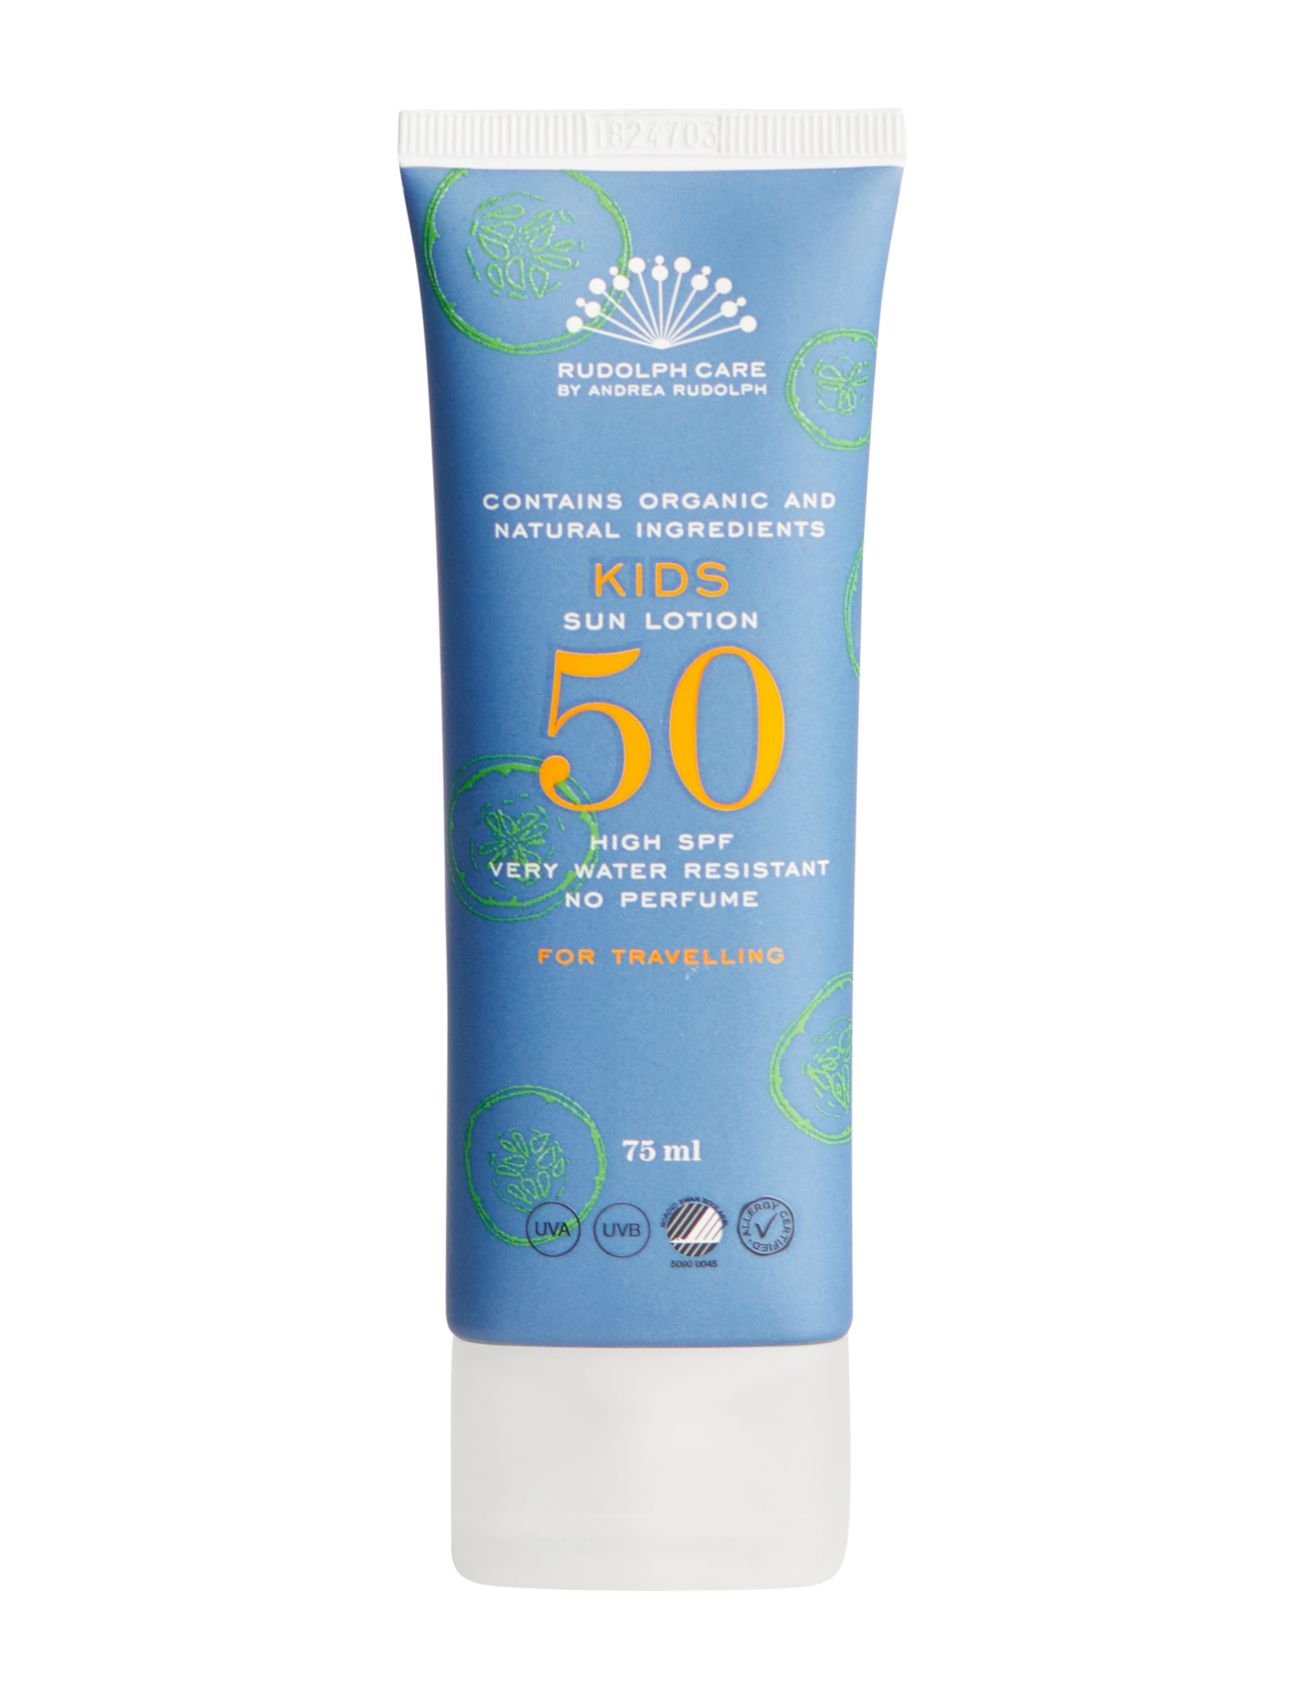 Sun Lotion Kids Spf 50  Beauty Women Skin Care Sun Products Sunscreen For Kids Nude Rudolph Care